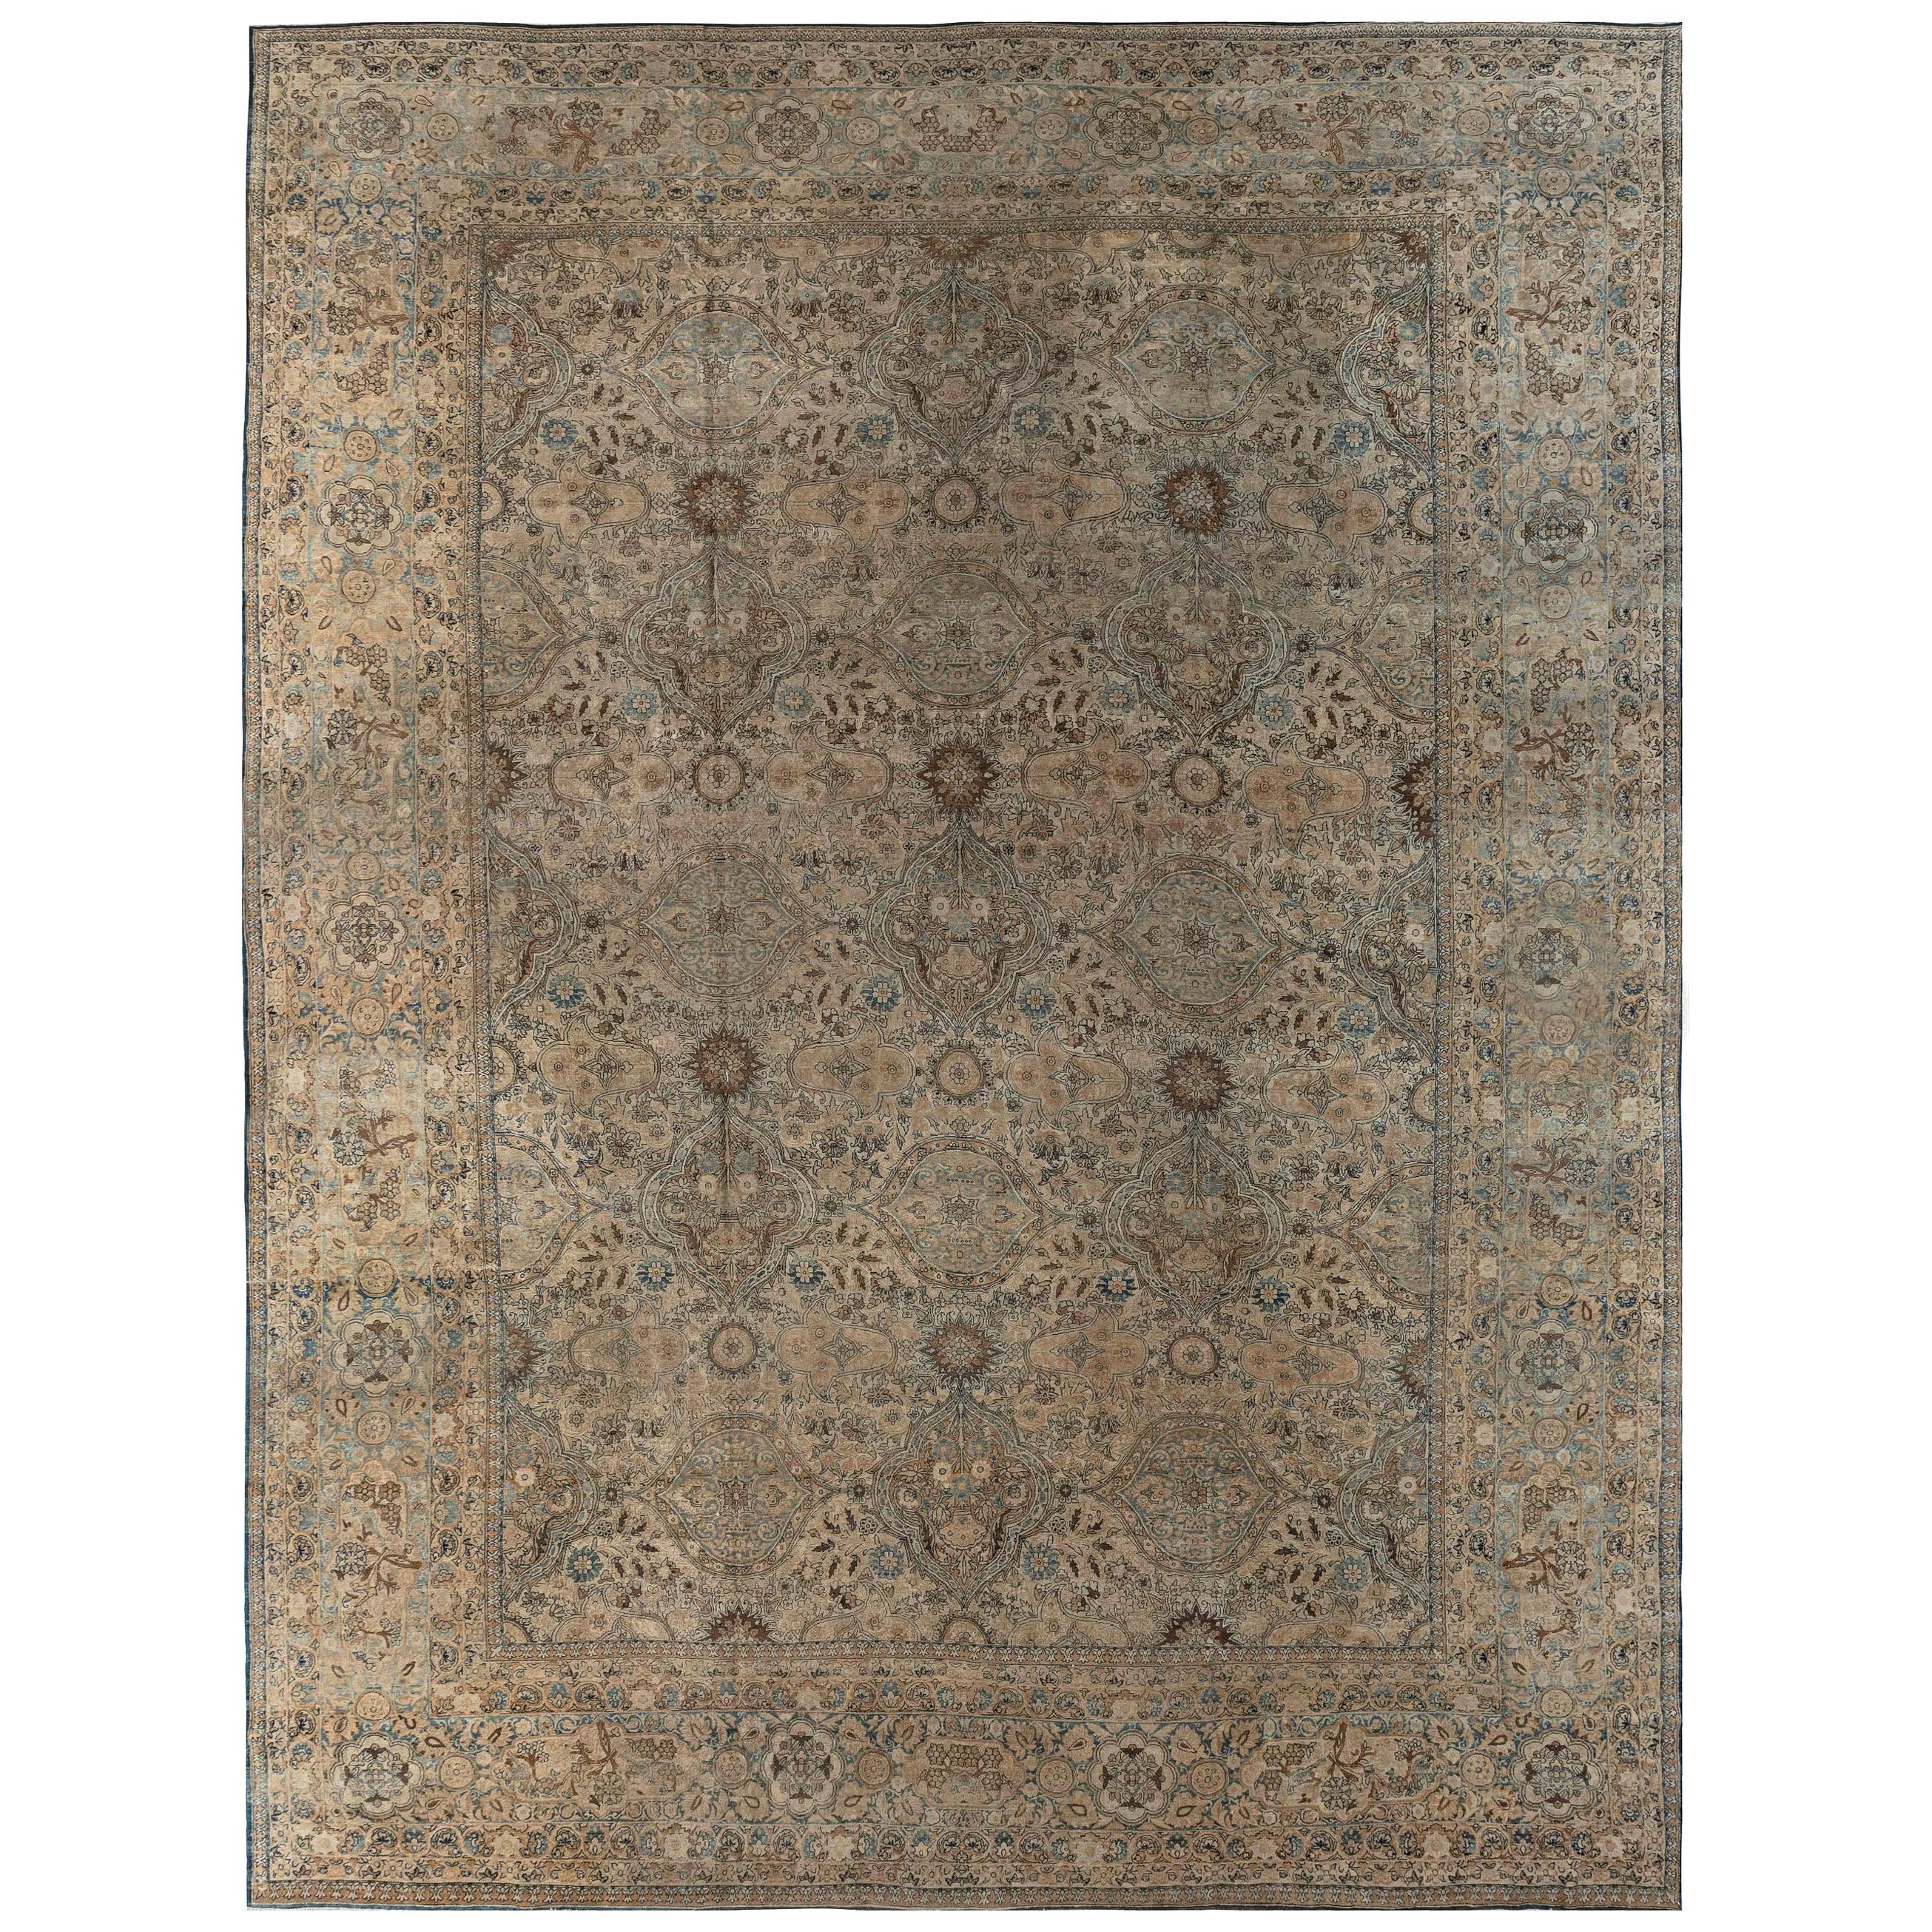 Oversized 19th Century Persian Kirman Carpet